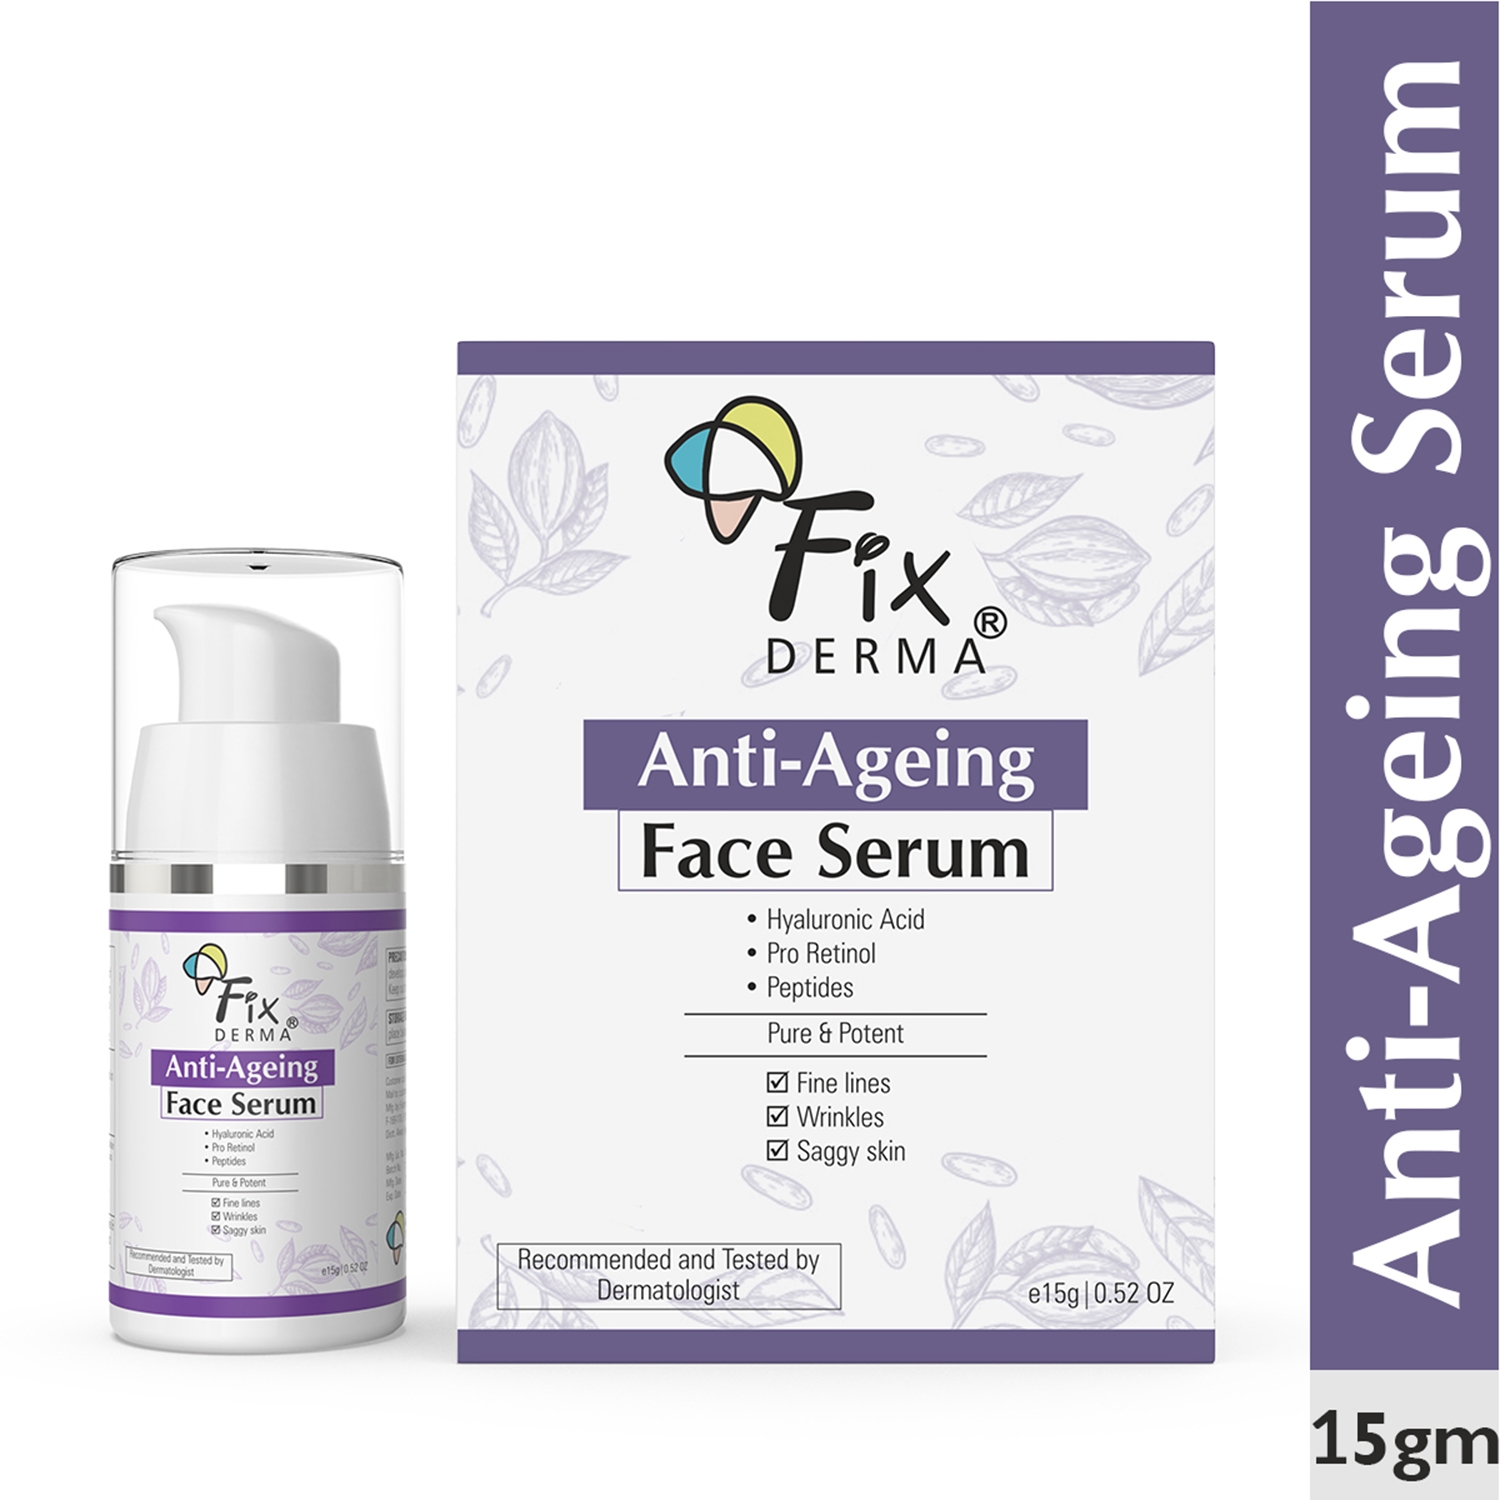 Fixderma | Fixderma Hyaluronic Acid Serum & Pro Retinol Anti Ageing Face Serum (15g)